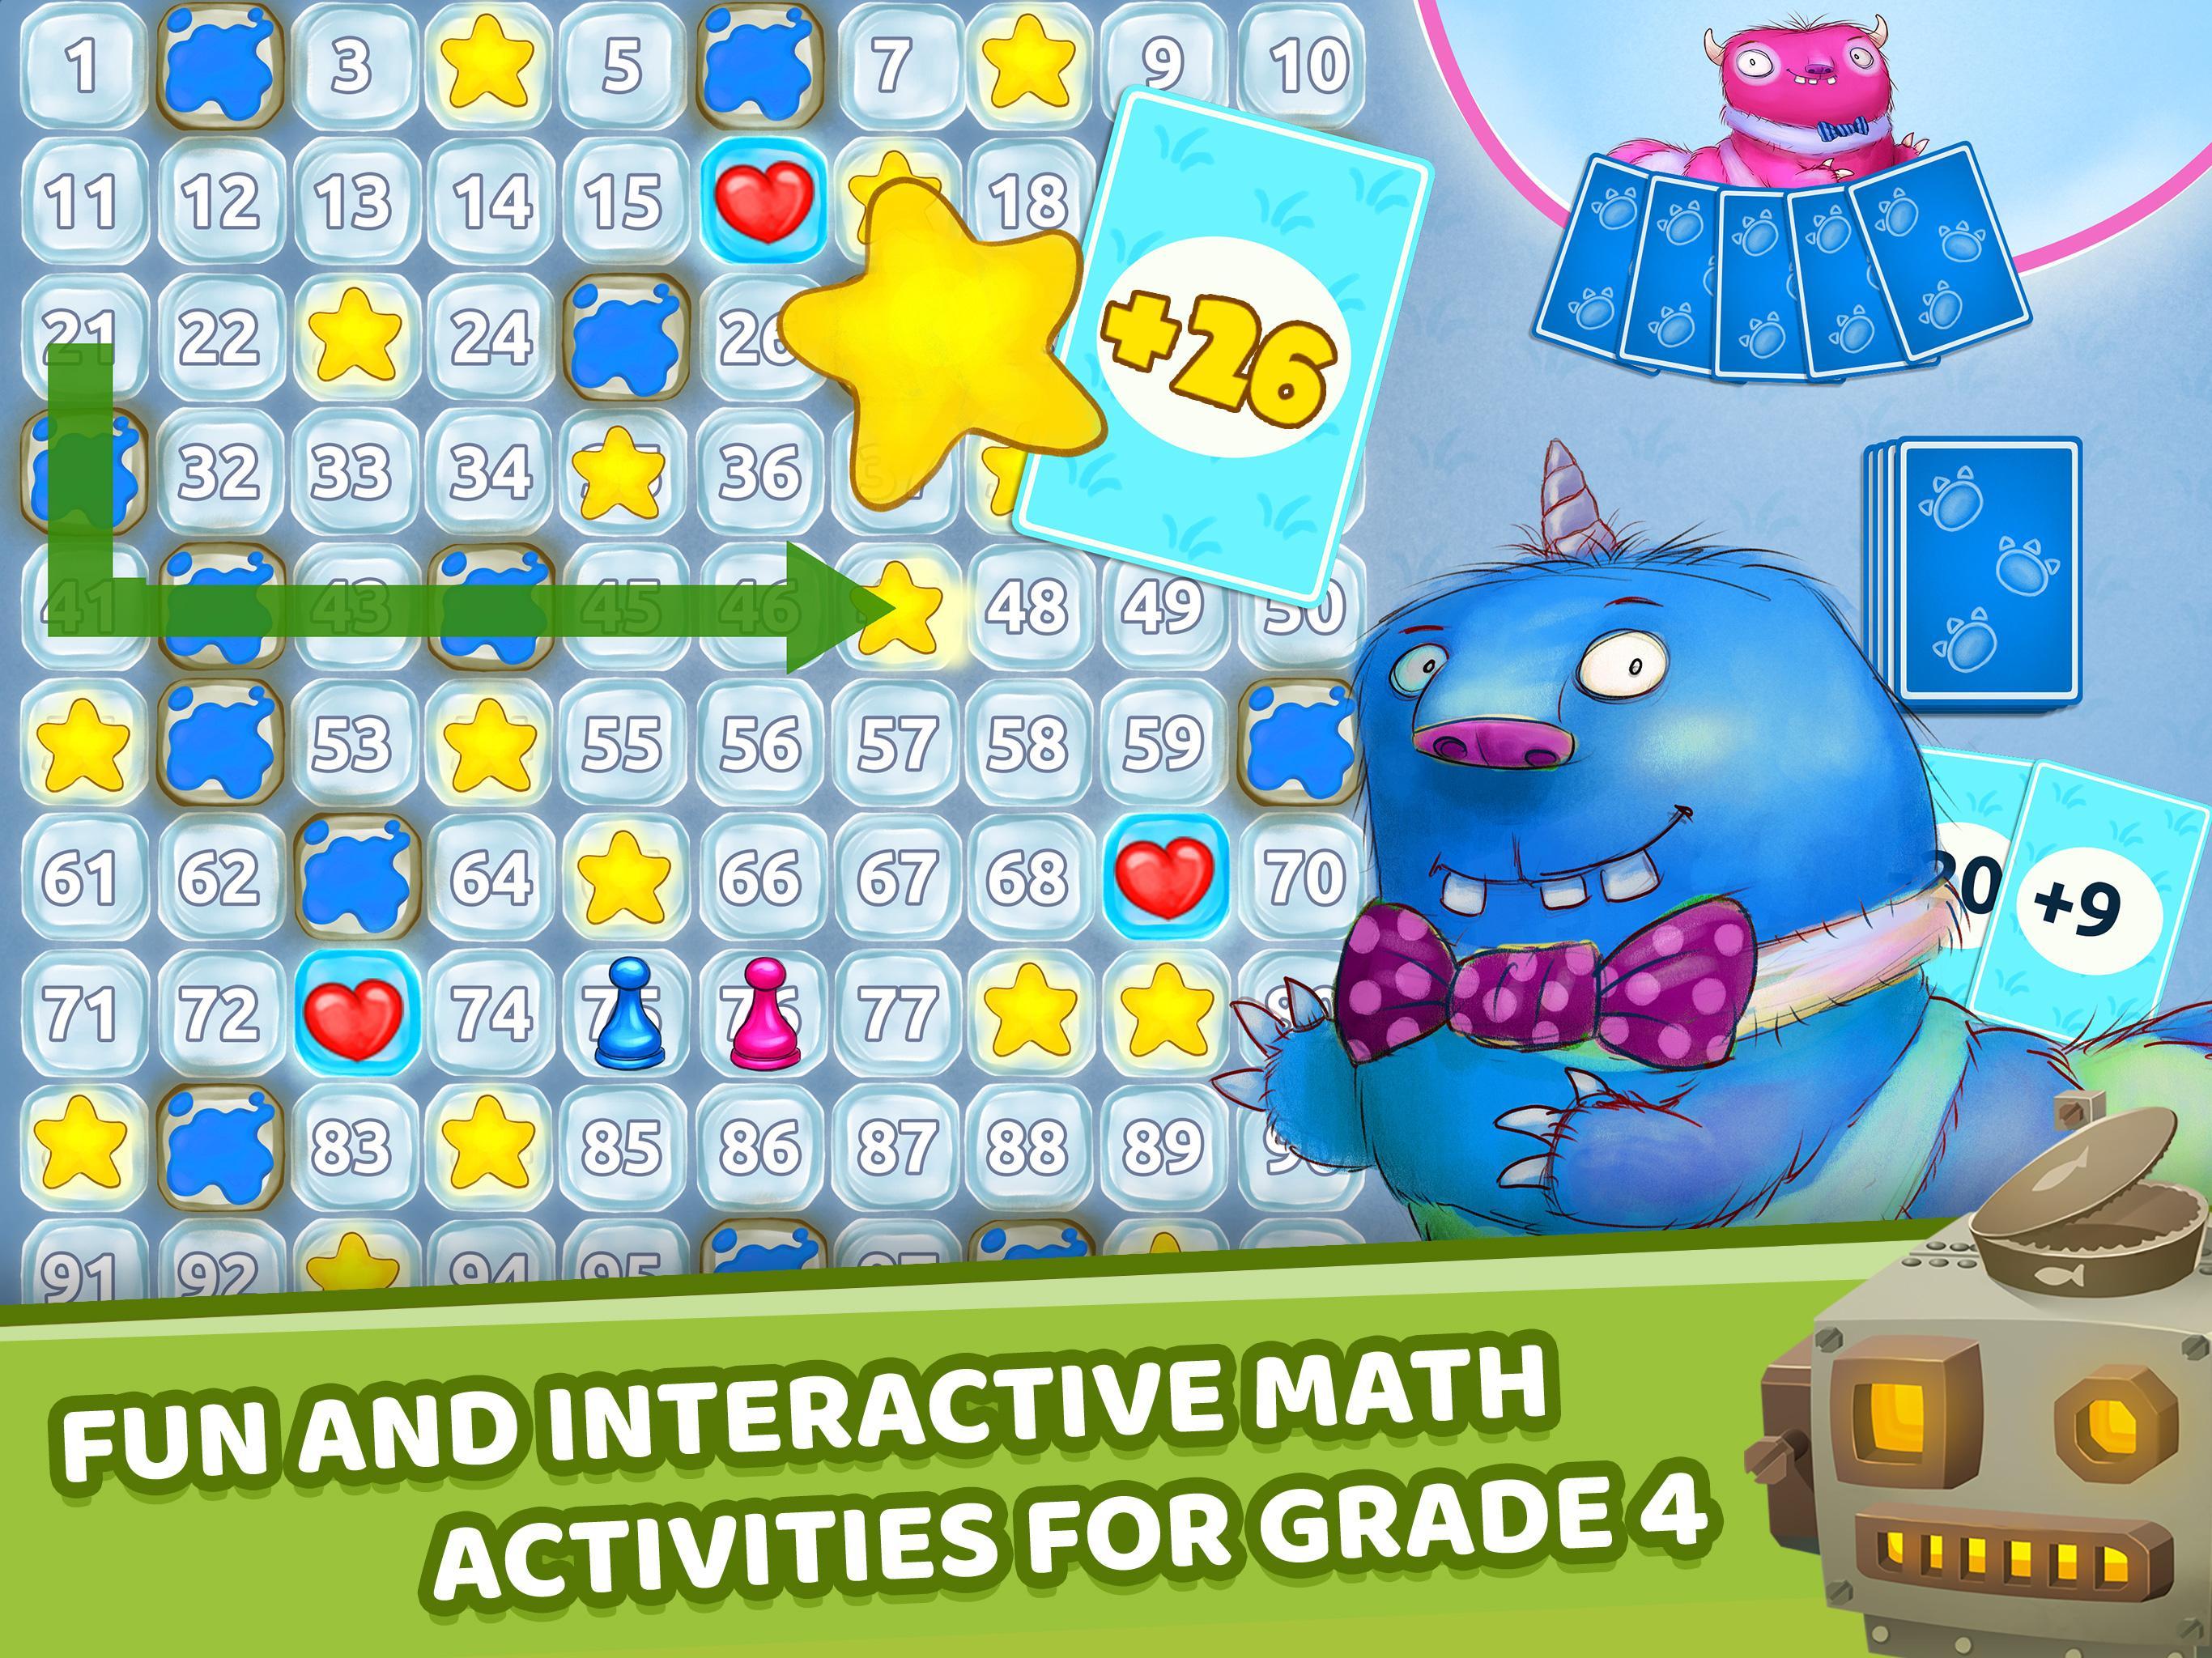 Matific Galaxy - Maths Games for 4th Graders 2.2.2 Screenshot 9